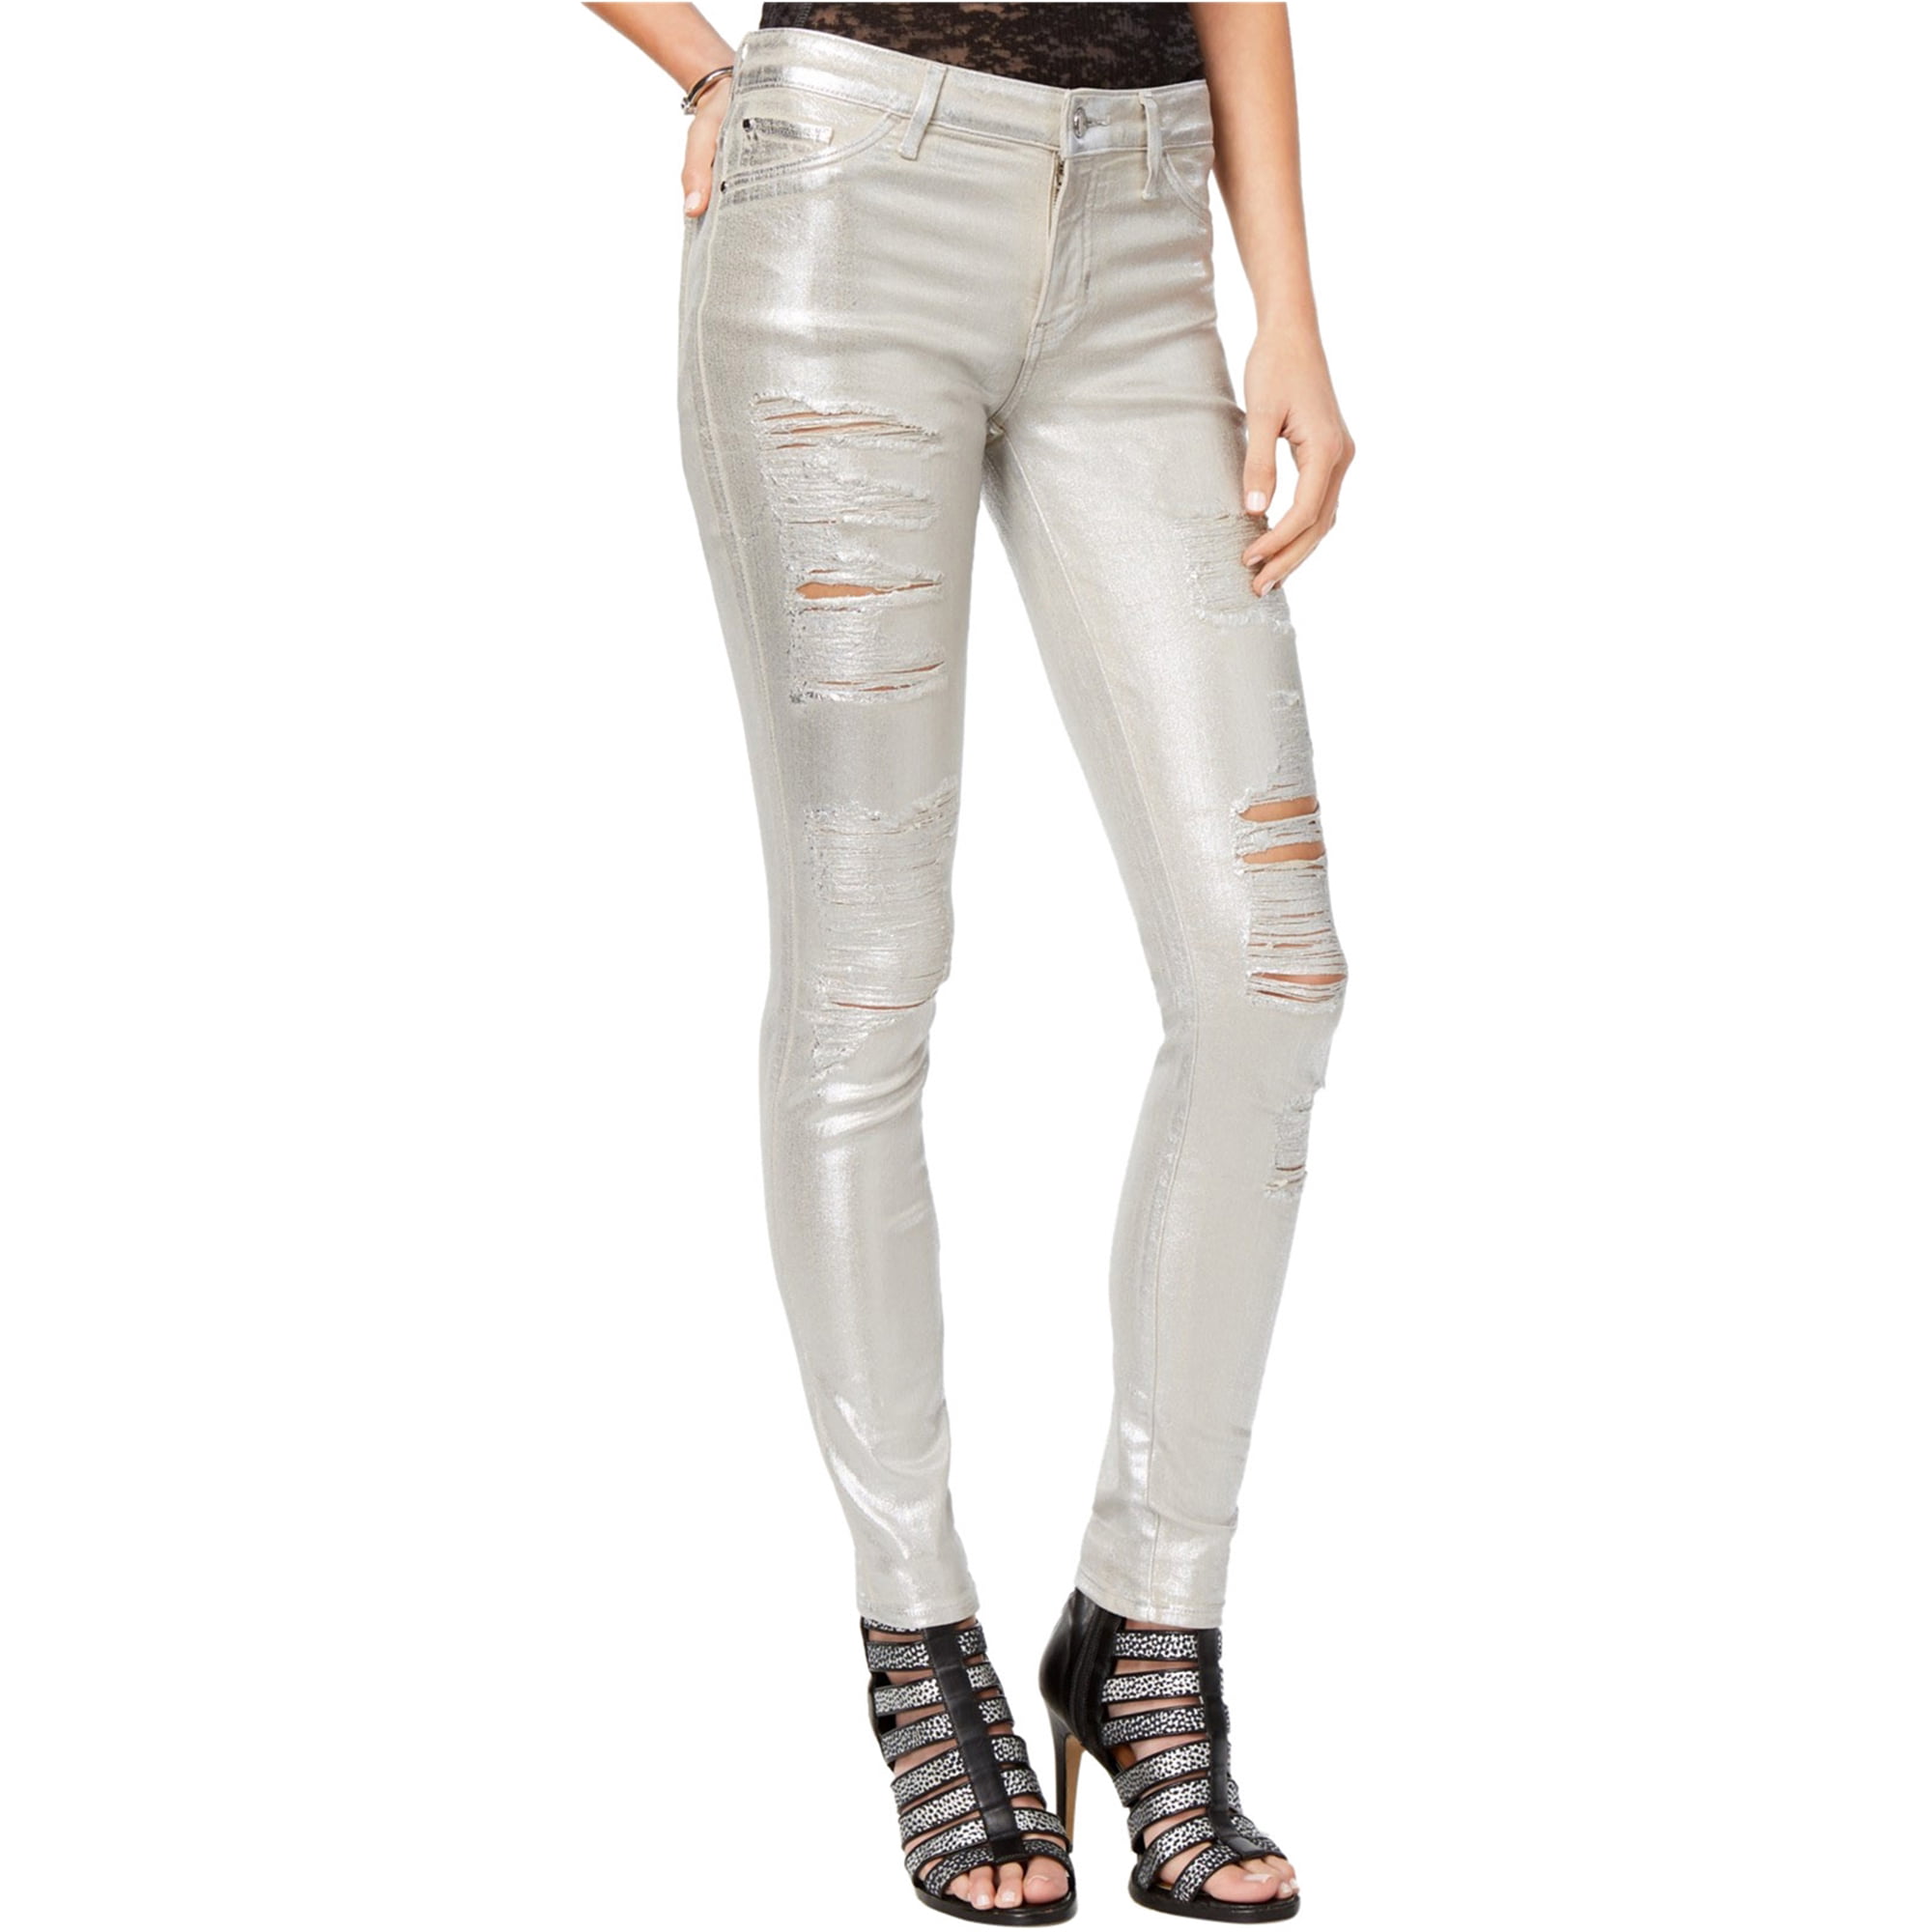 GUESS - Guess Womens Metallic Skinny Fit Jeans - Walmart.com - Walmart.com